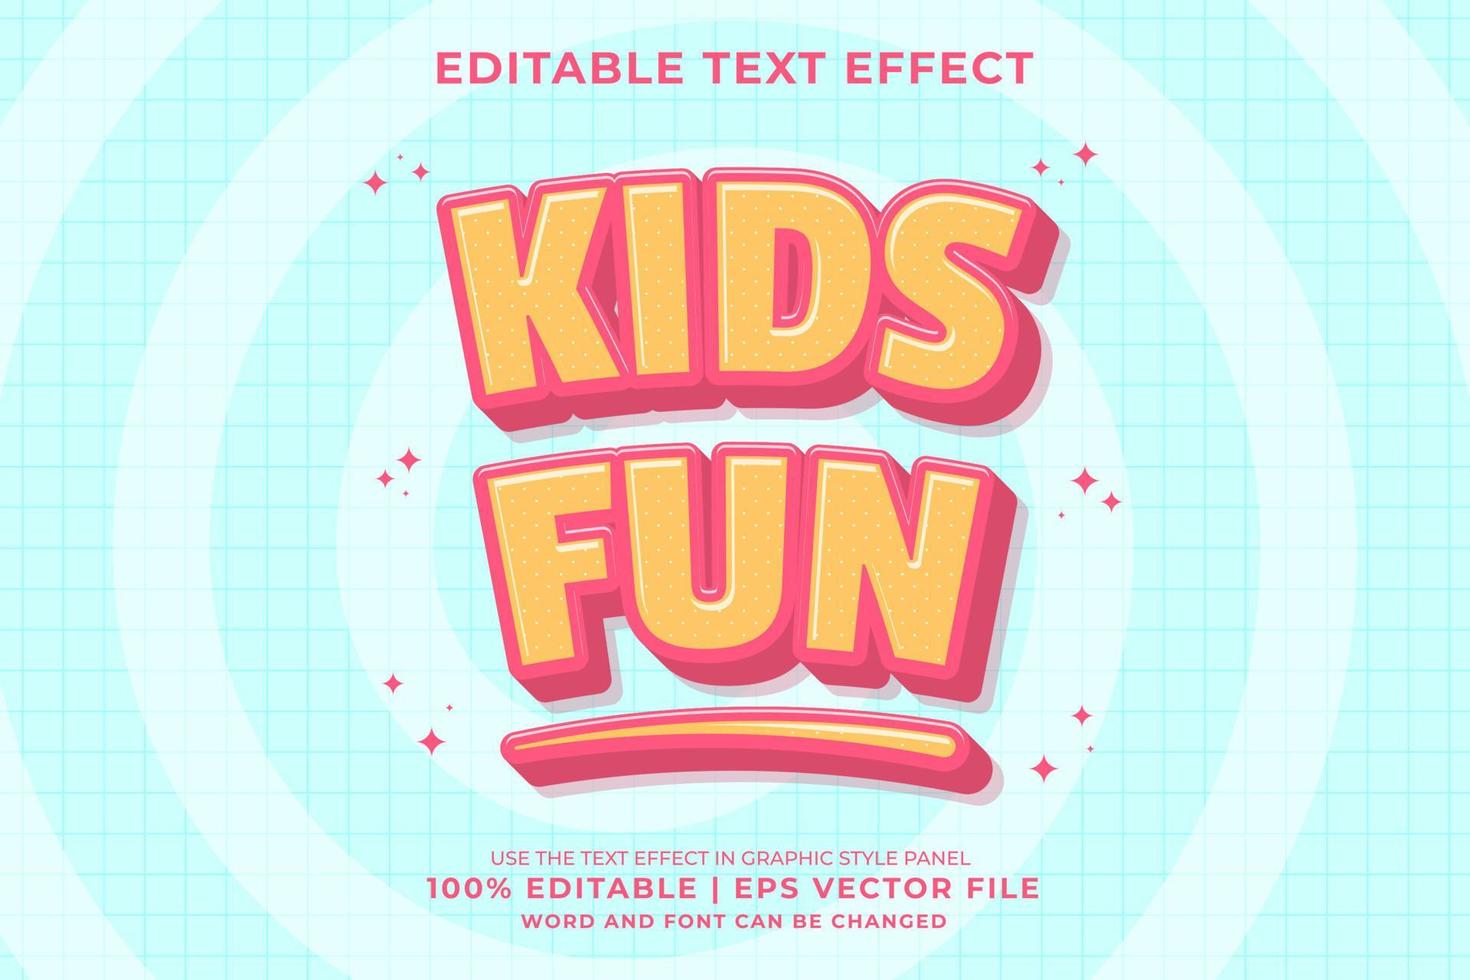 Editable text effect - Kids Fun Cartoon template style premium vector